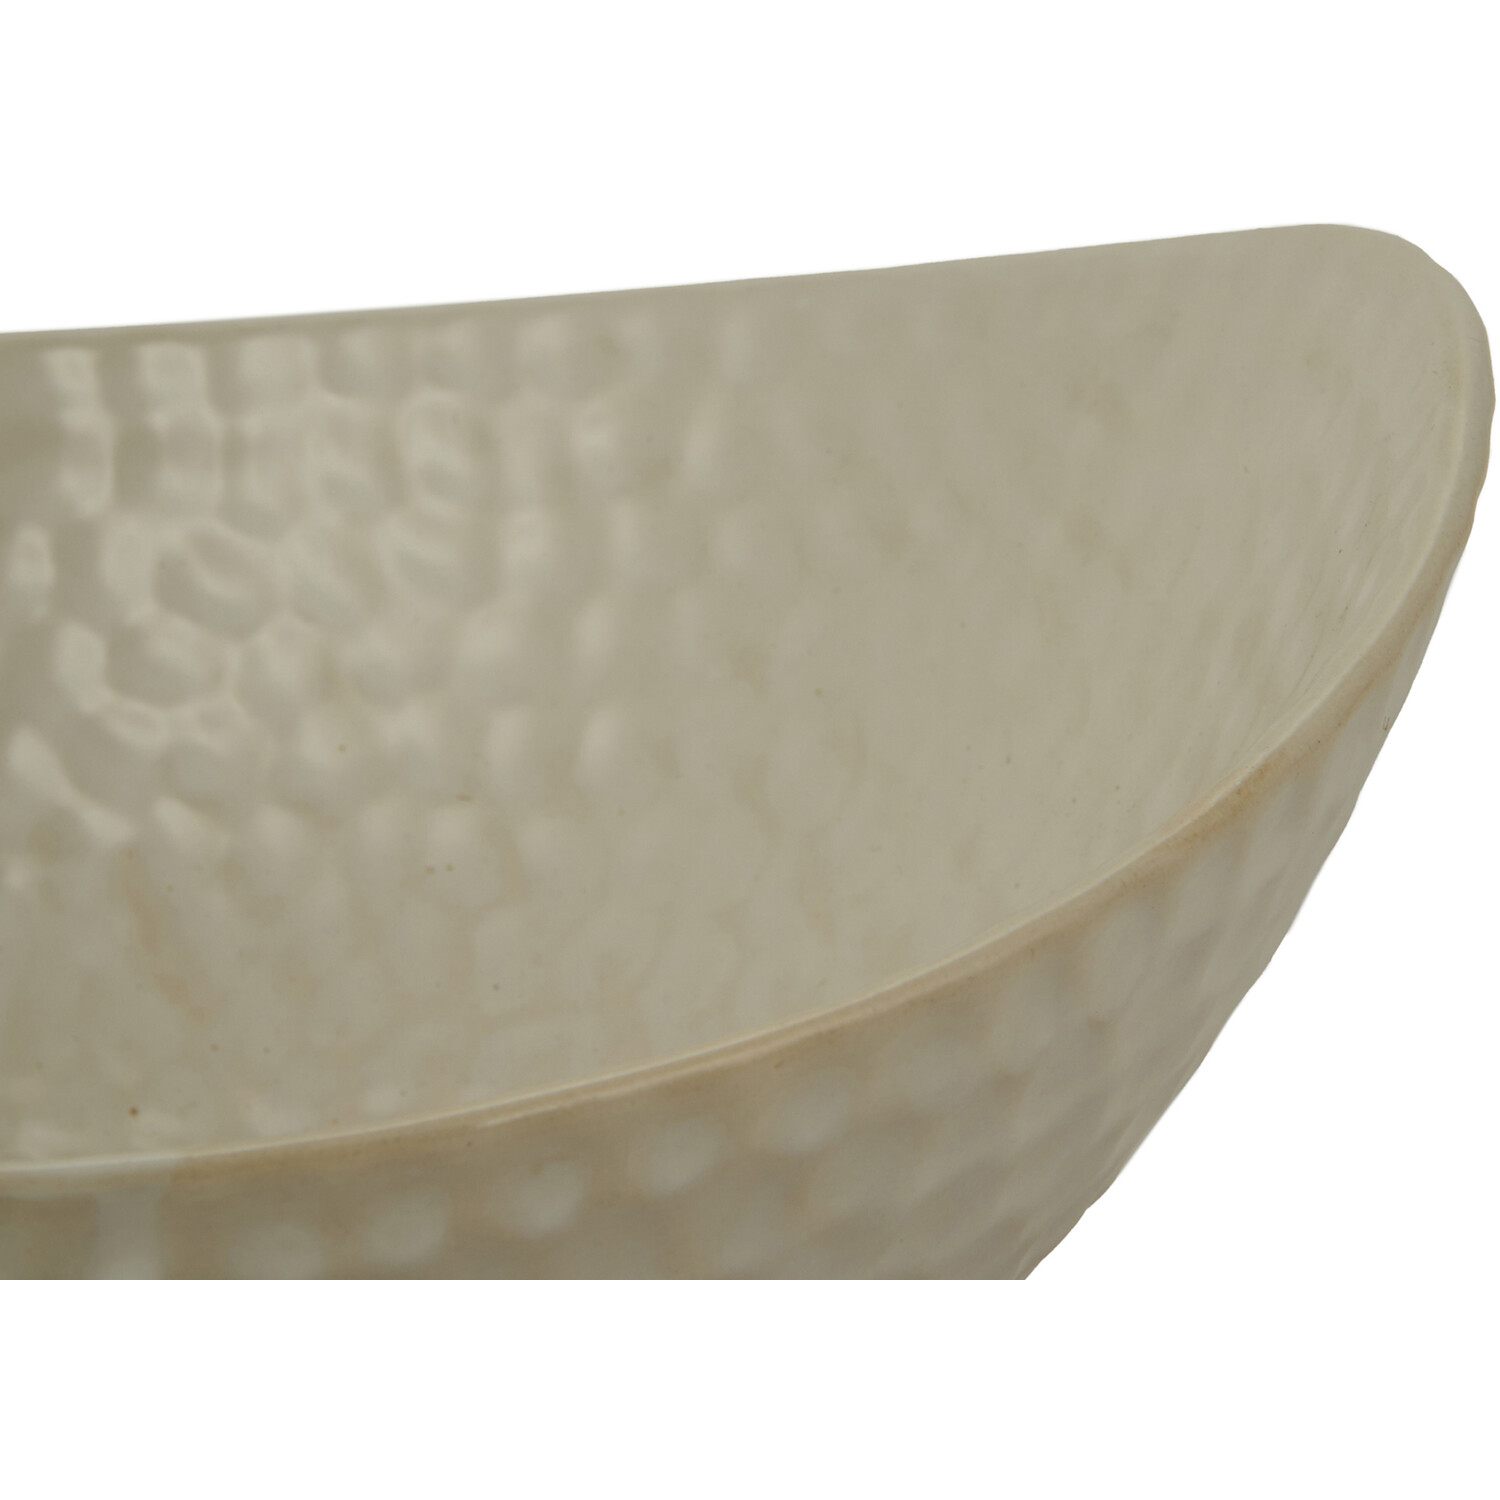 Hammered Matte Bowl - White Image 2